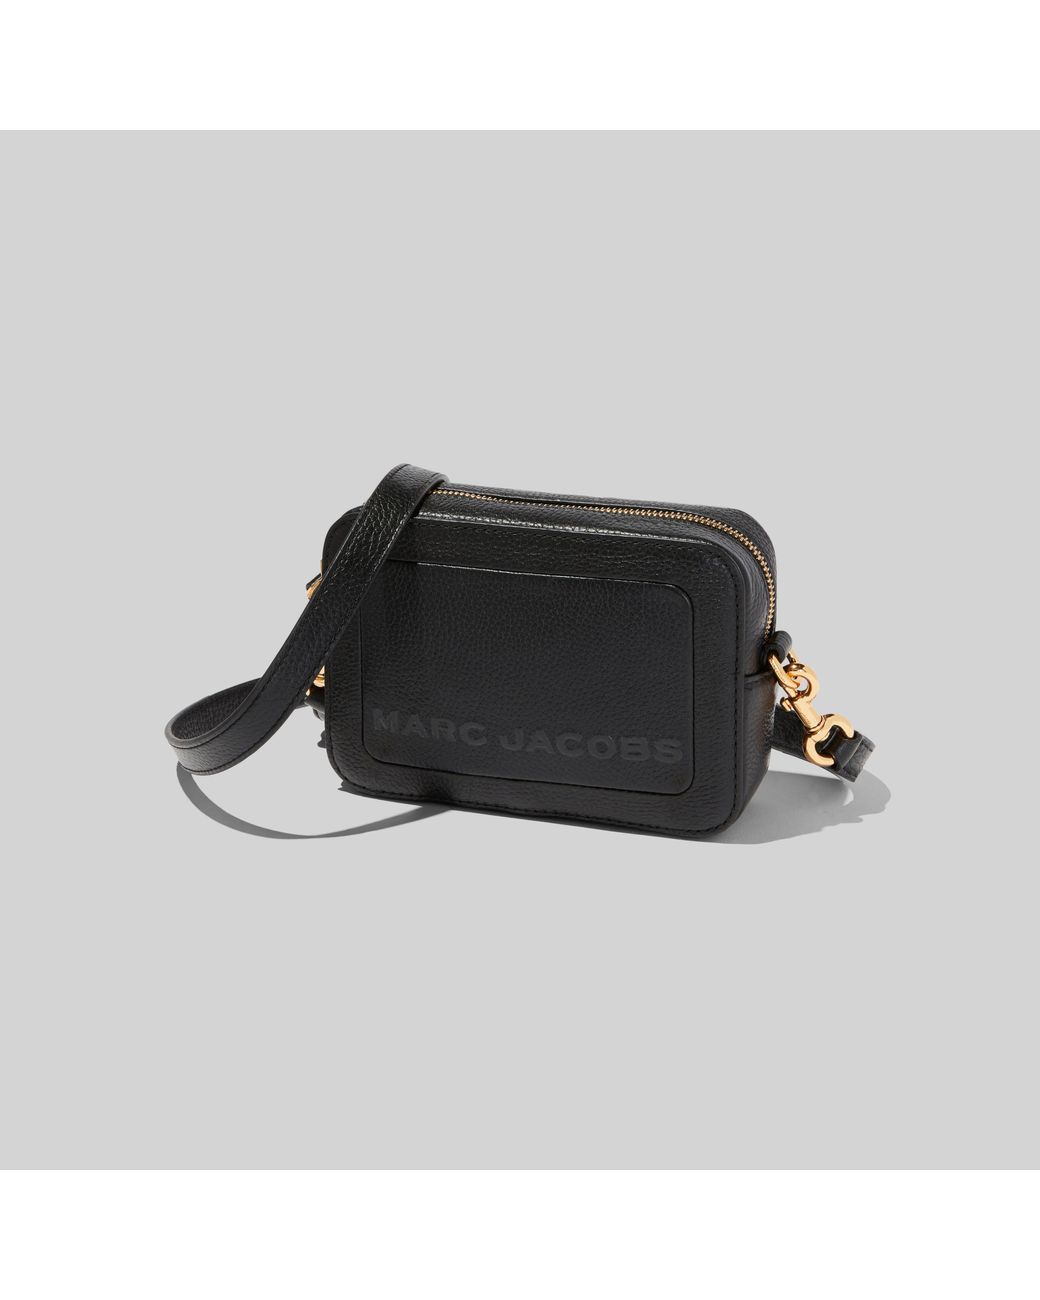 Marc Jacobs Mini Box Crossbody Bag in Black | Lyst